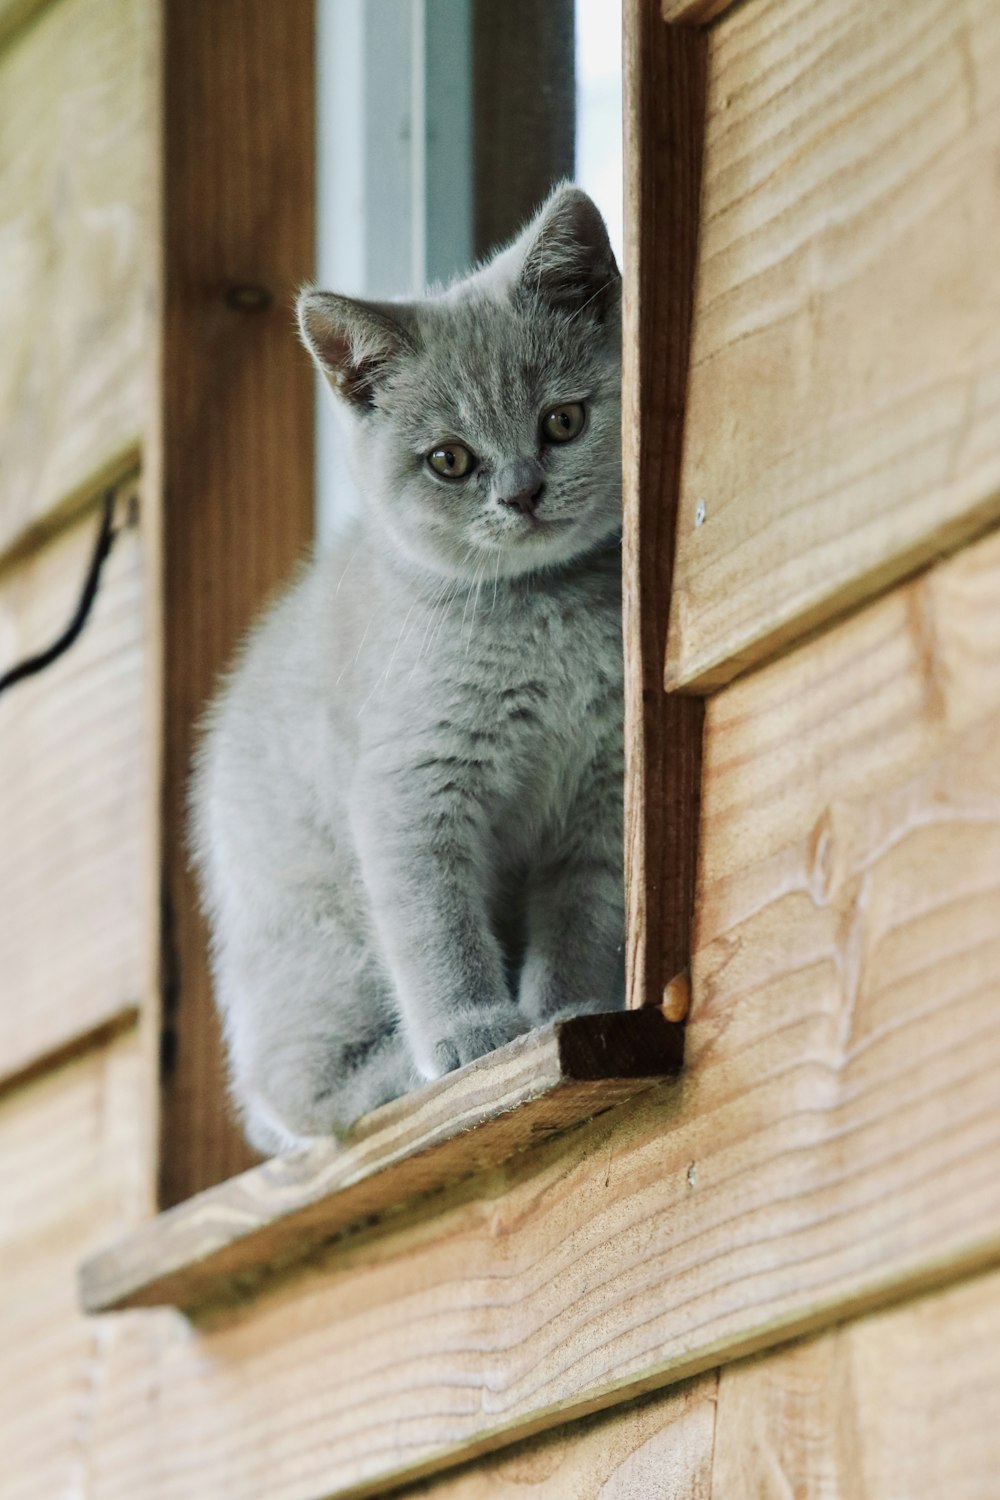 a small gray kitten sitting in a window sill